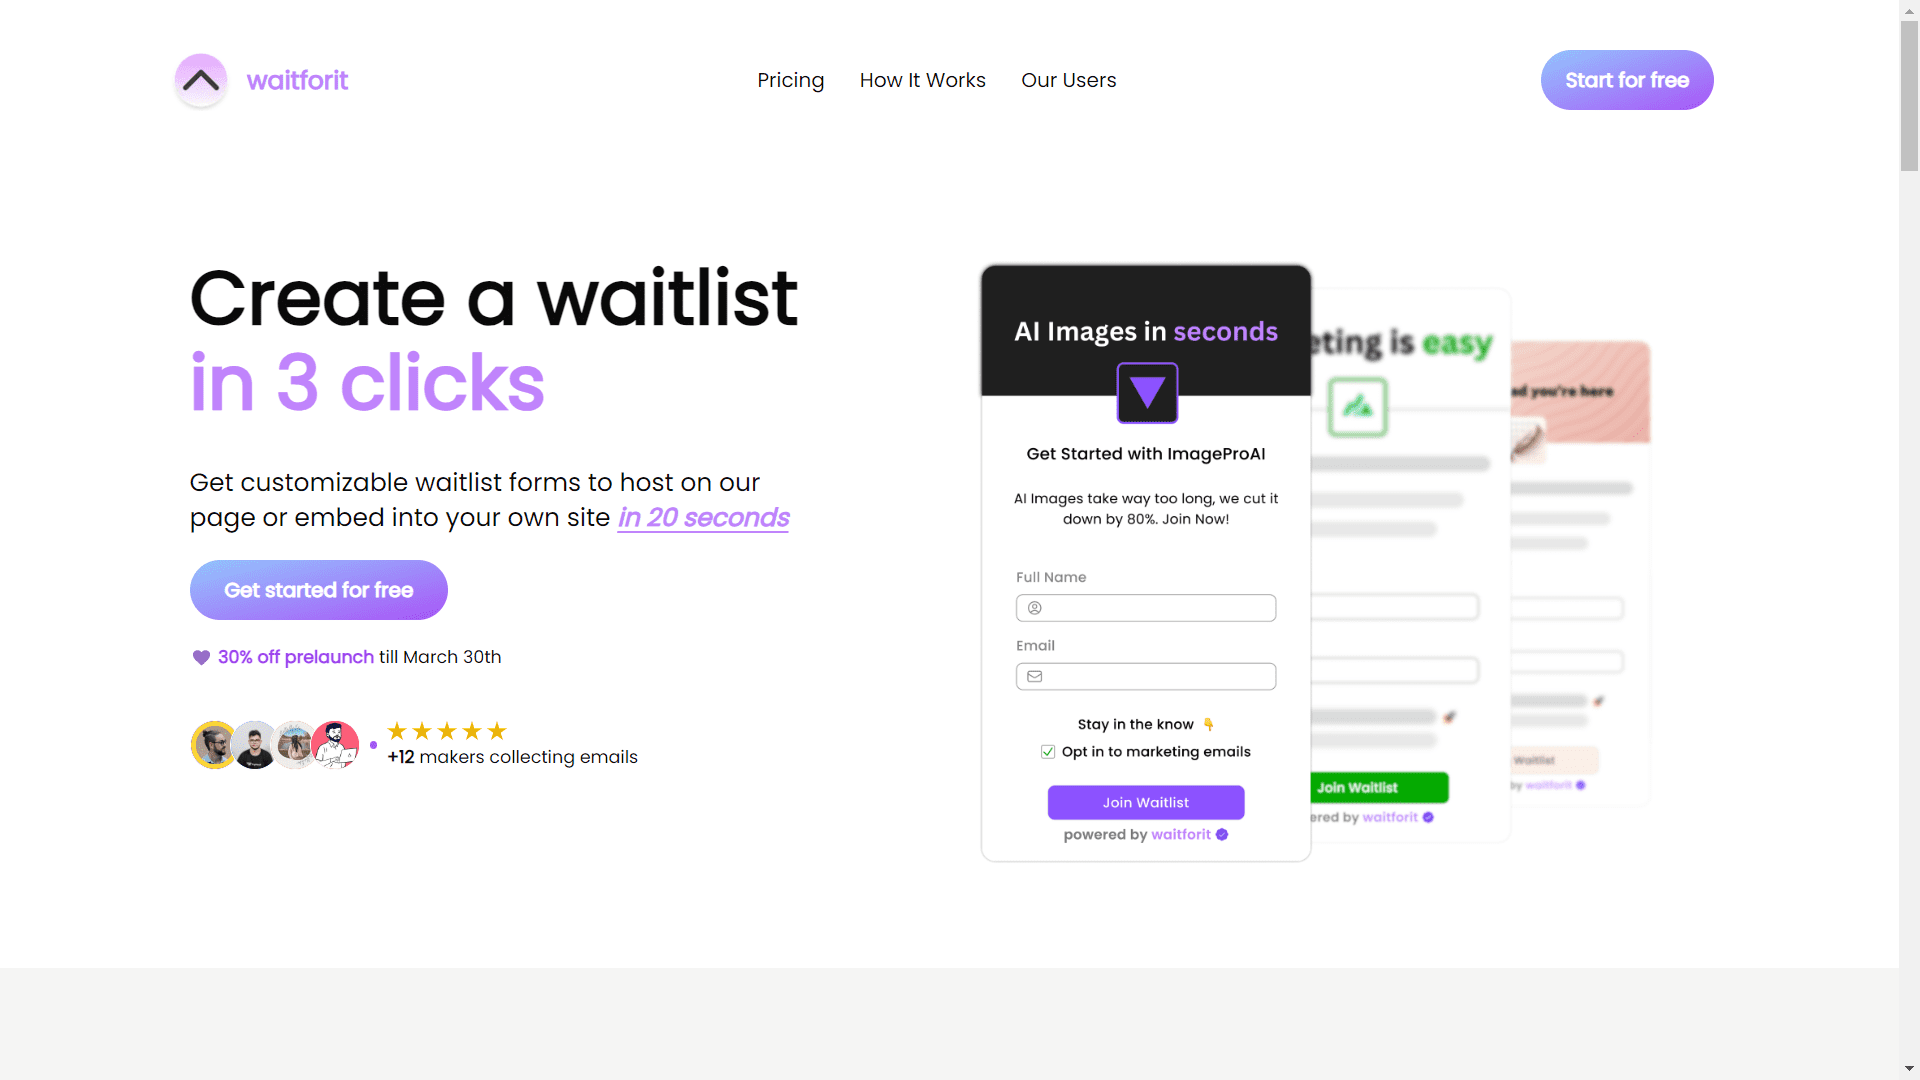 Waitforit: Powerful AI Tool for Creating a Customizable Waitlist